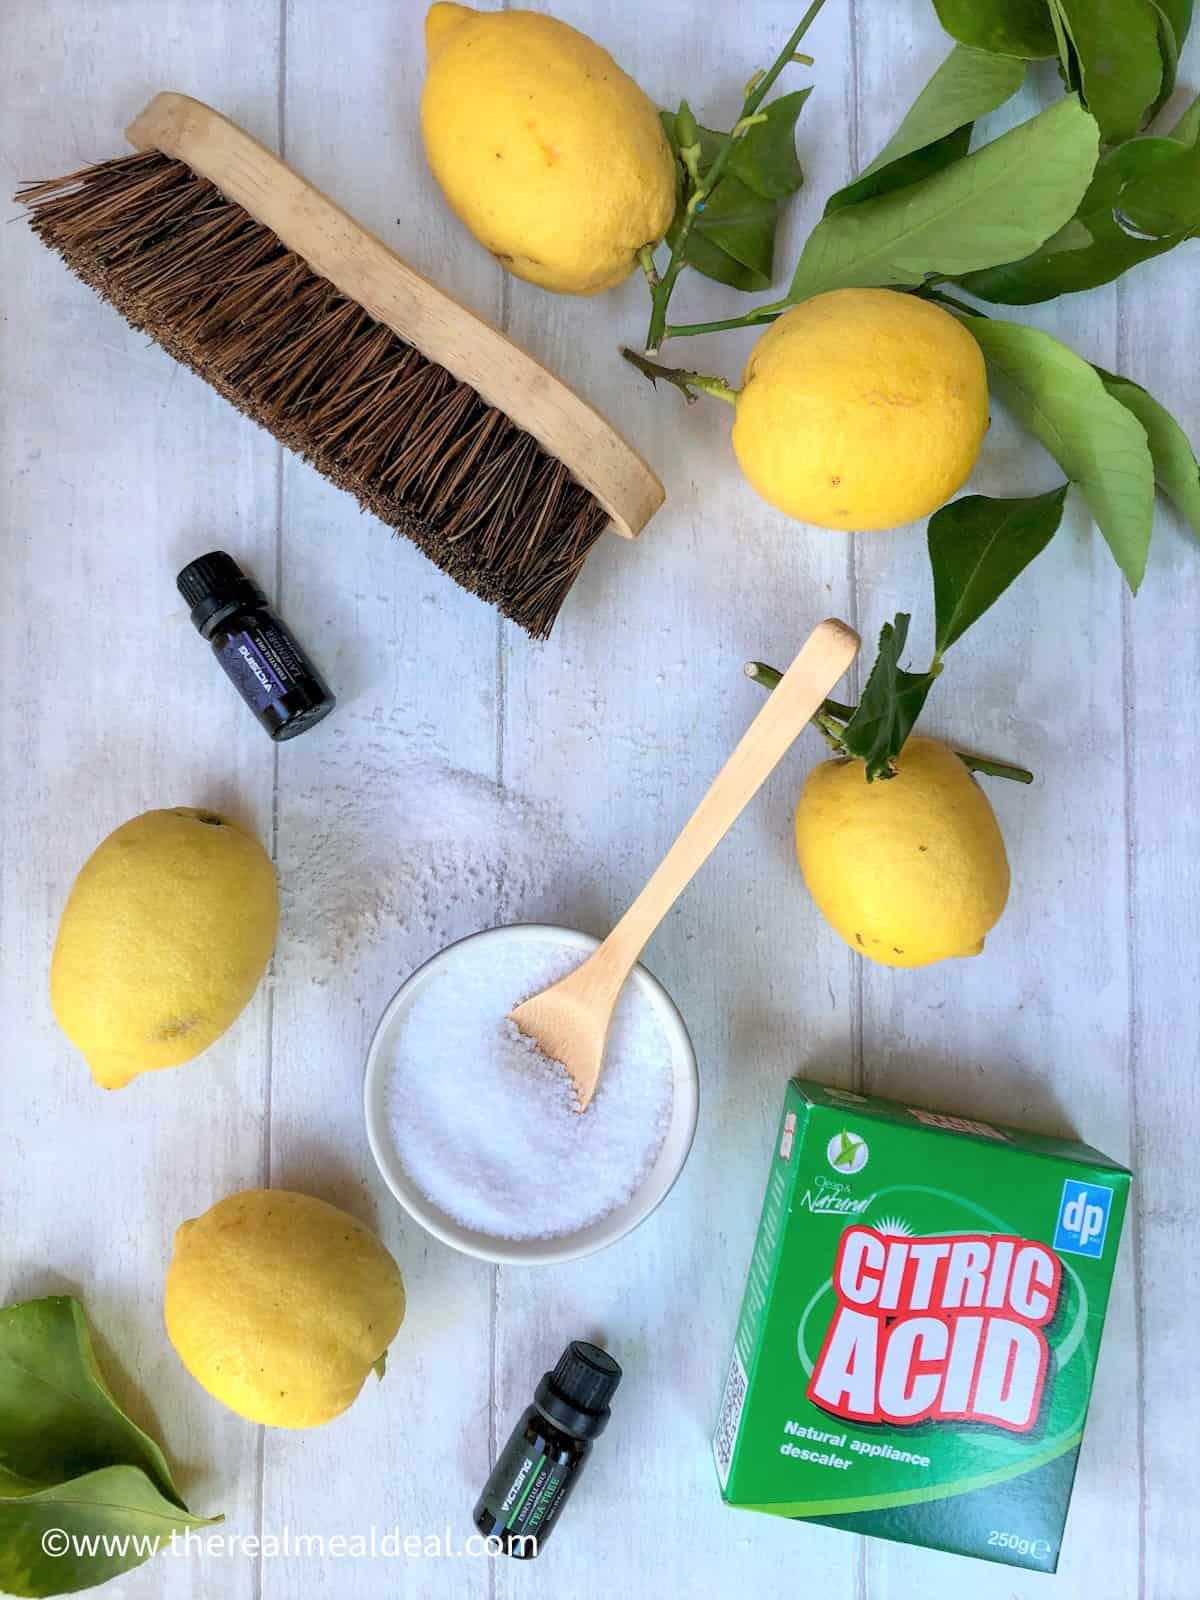 eco cleaning ingredients fresh lemons citric acid lavender oil tea tree oil dishwasher salt in bowl in centre and hard bristle wooden brush